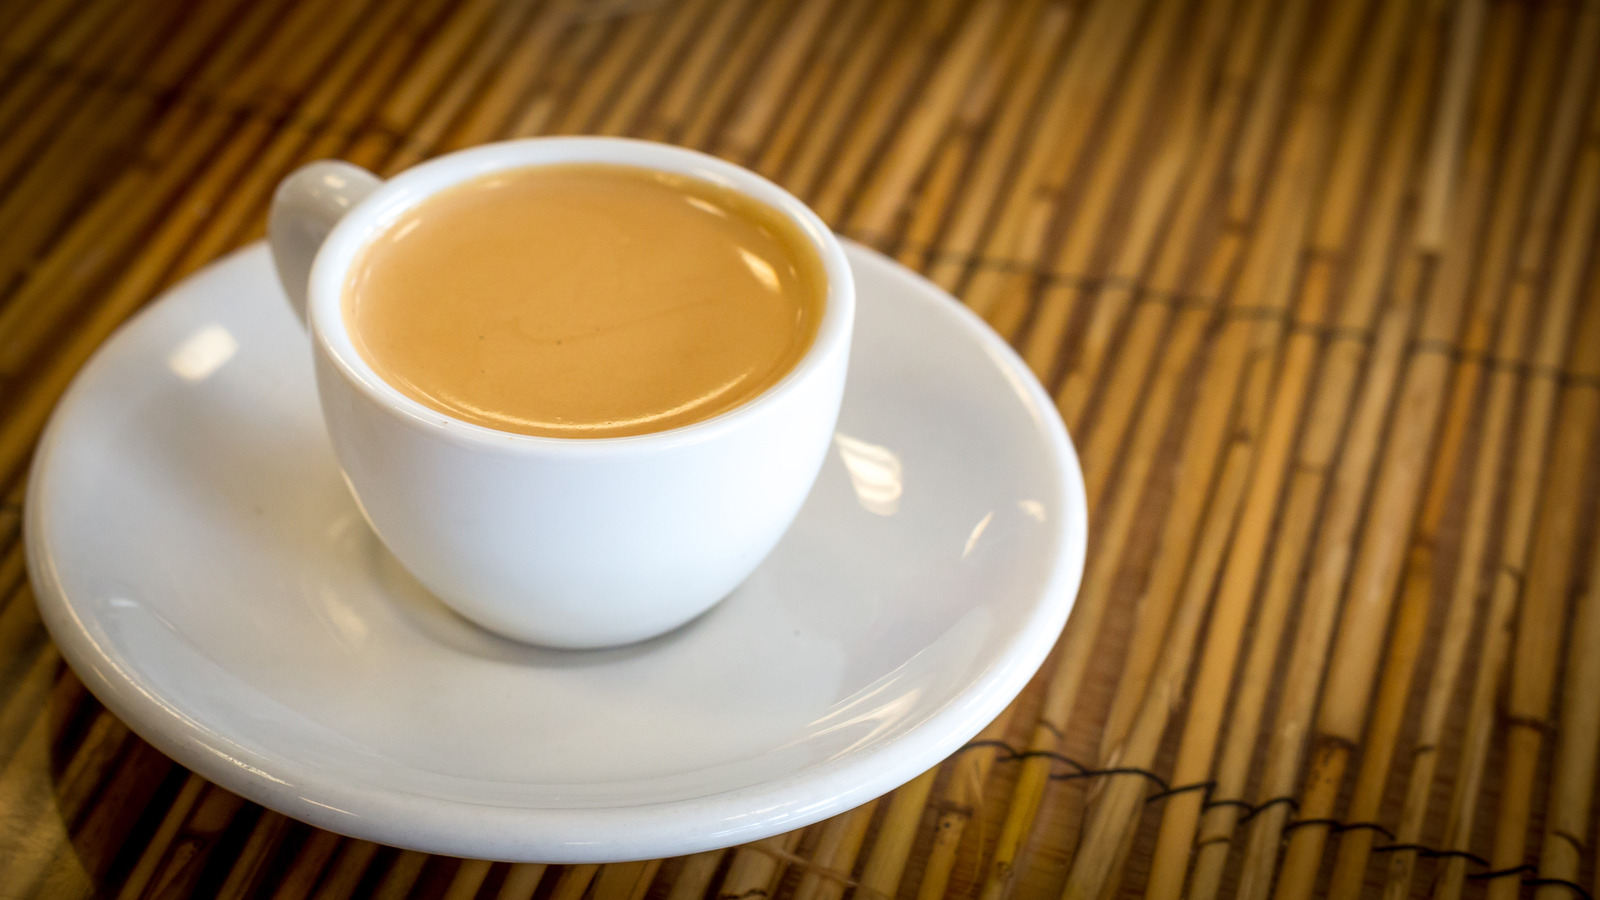 Cafe cubano, Coffee, History, & Facts